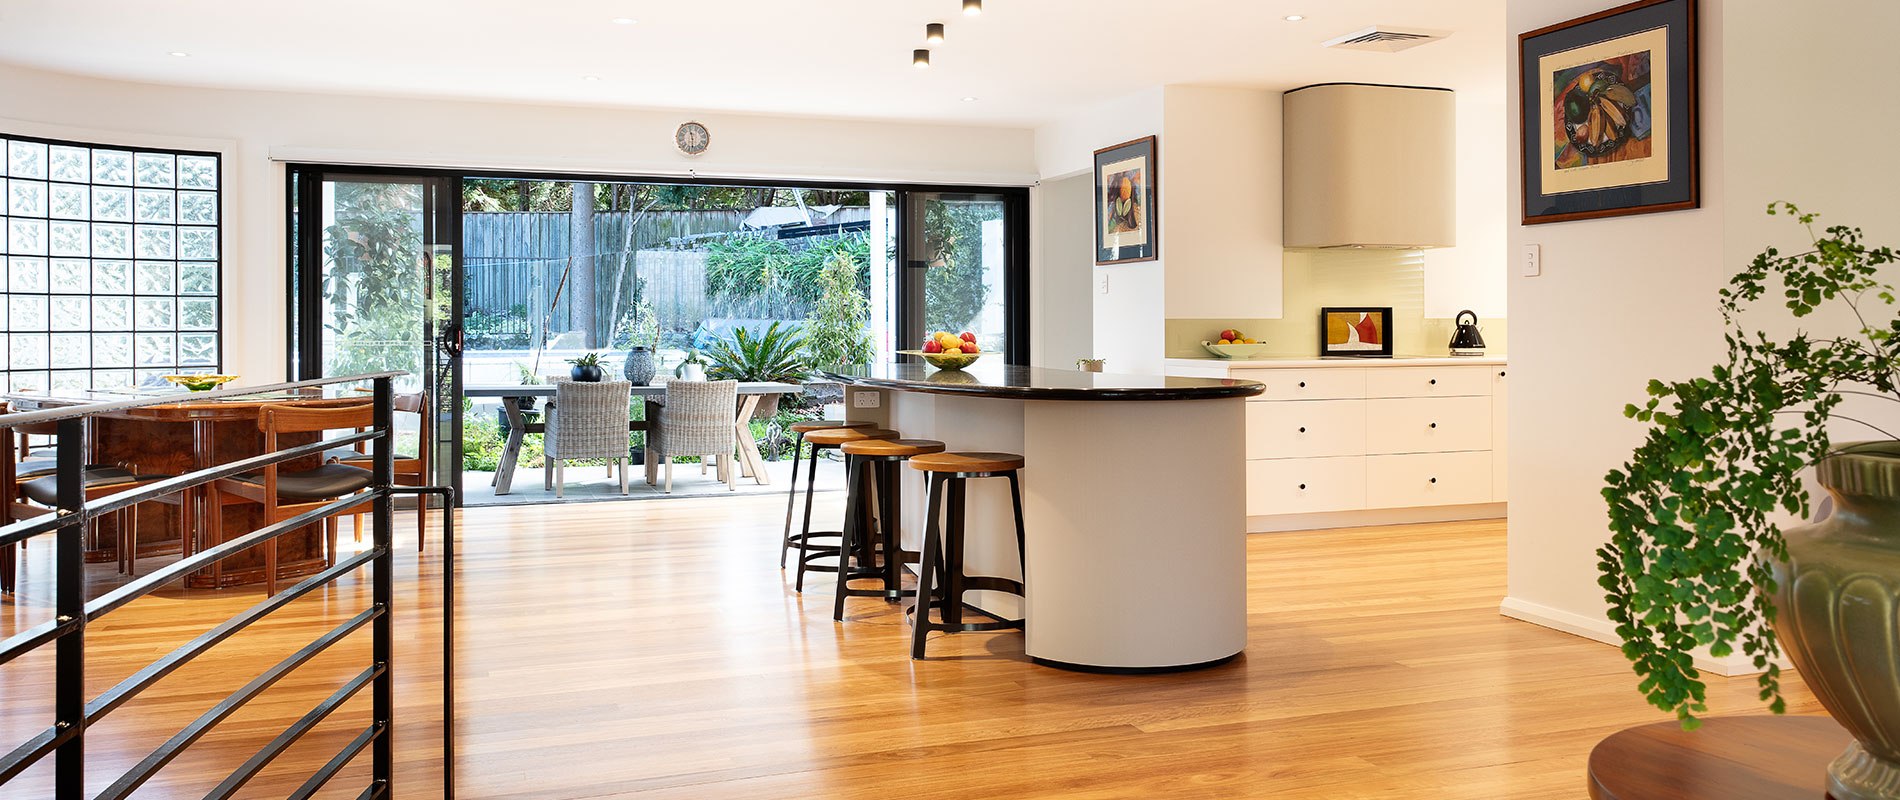 grand residential renovation kitchen